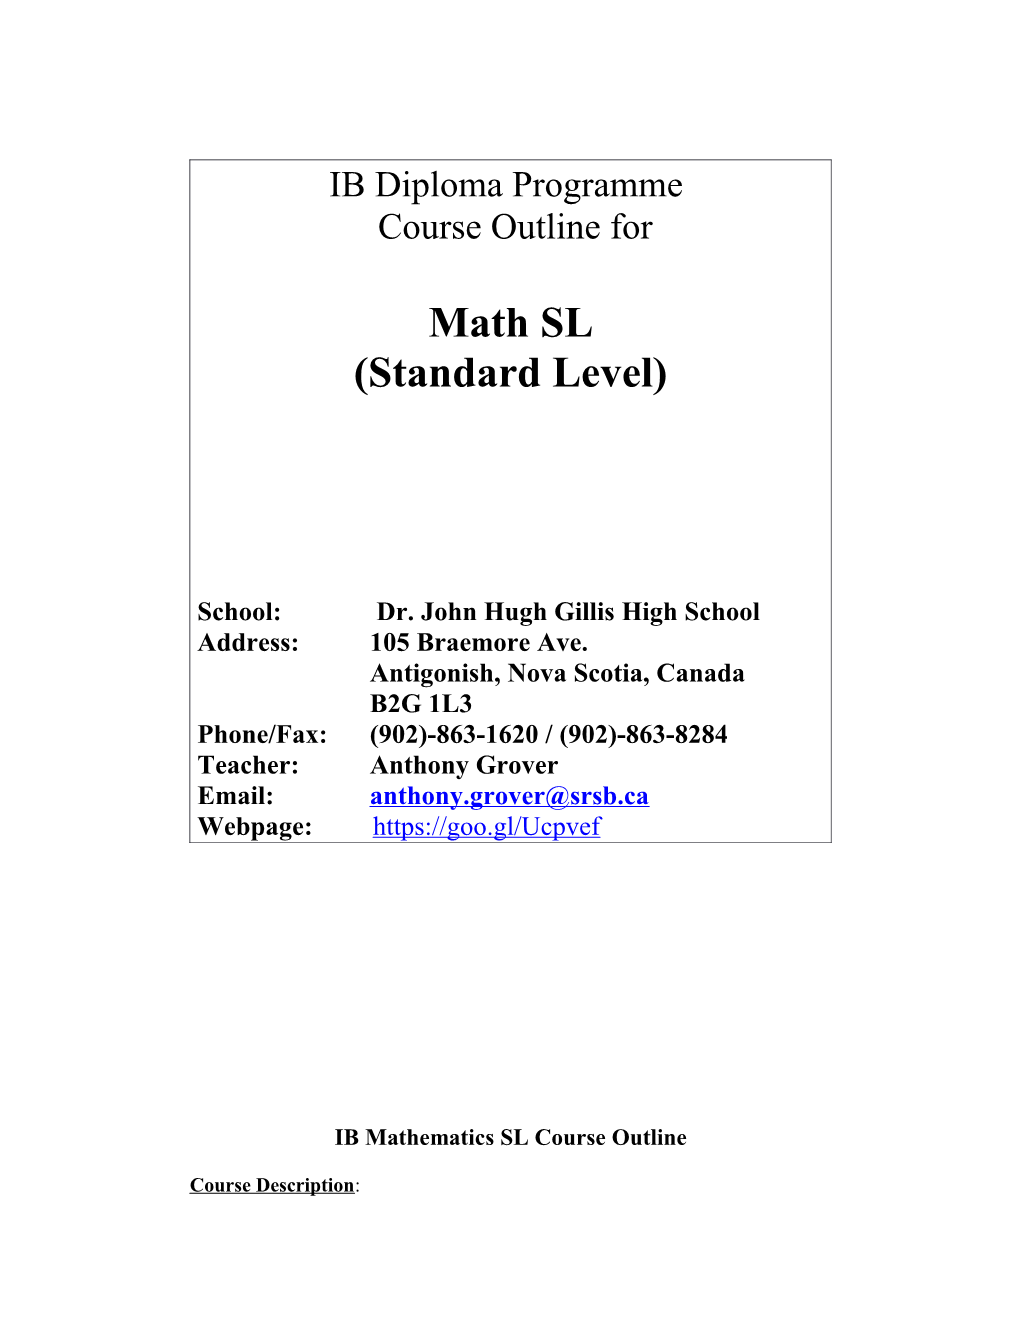 IB Mathematics SL Course Outline